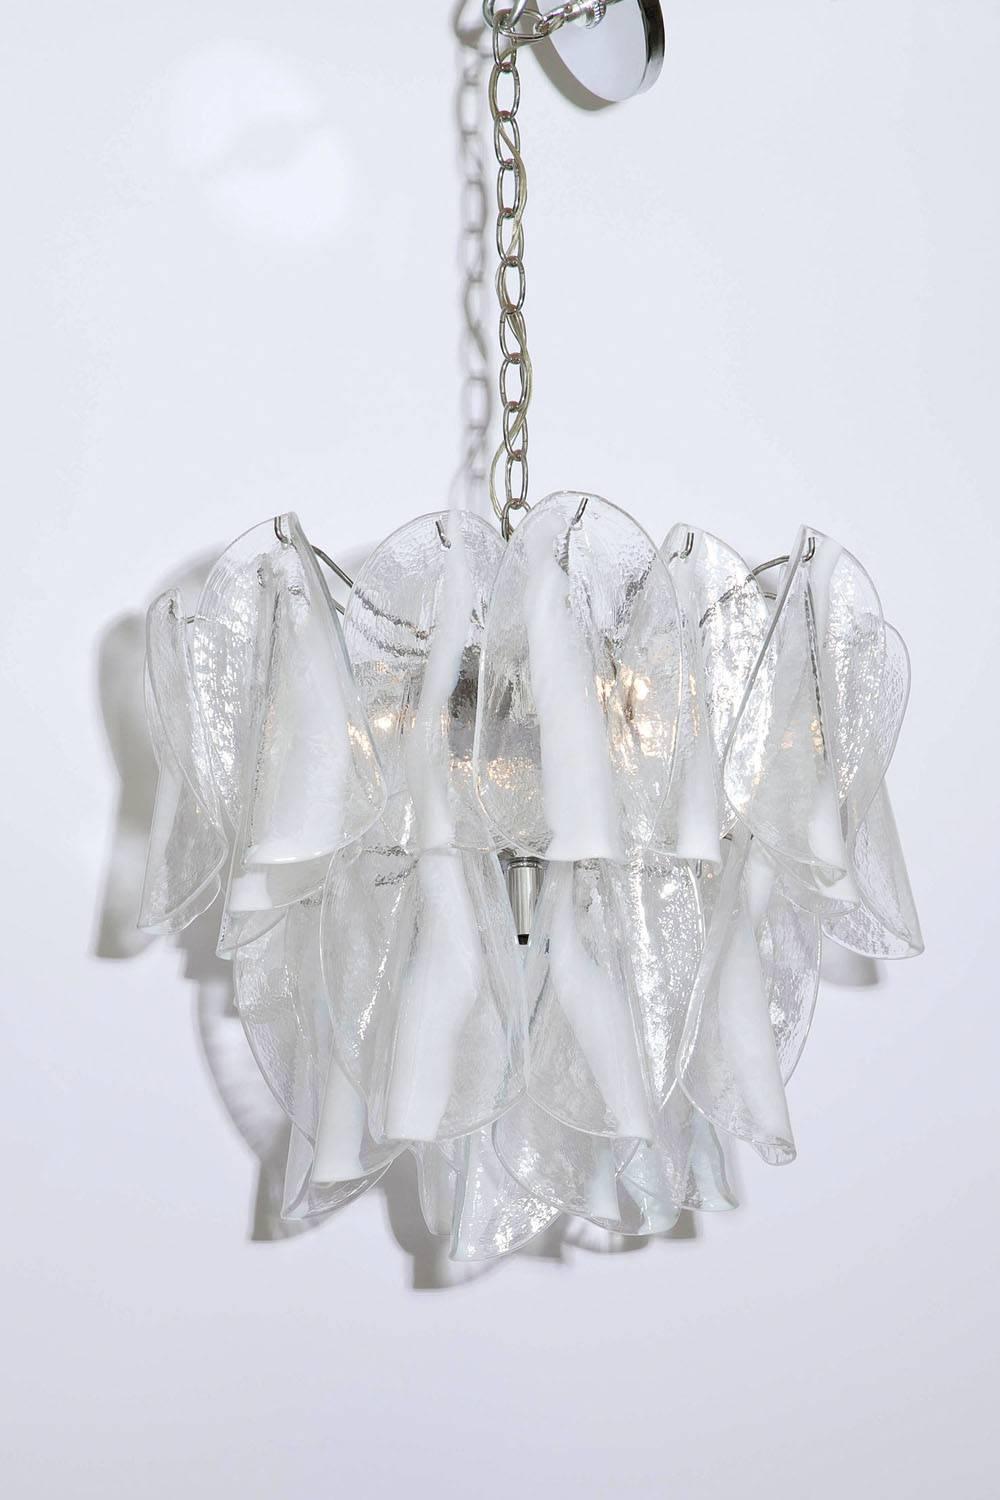 1970s Mazzega handblown clear and white Murano glass petal chandelier. Glass petals hang from a 6 light chrome-plated steel frame. Uses six 40 watt candelabra bulbs.